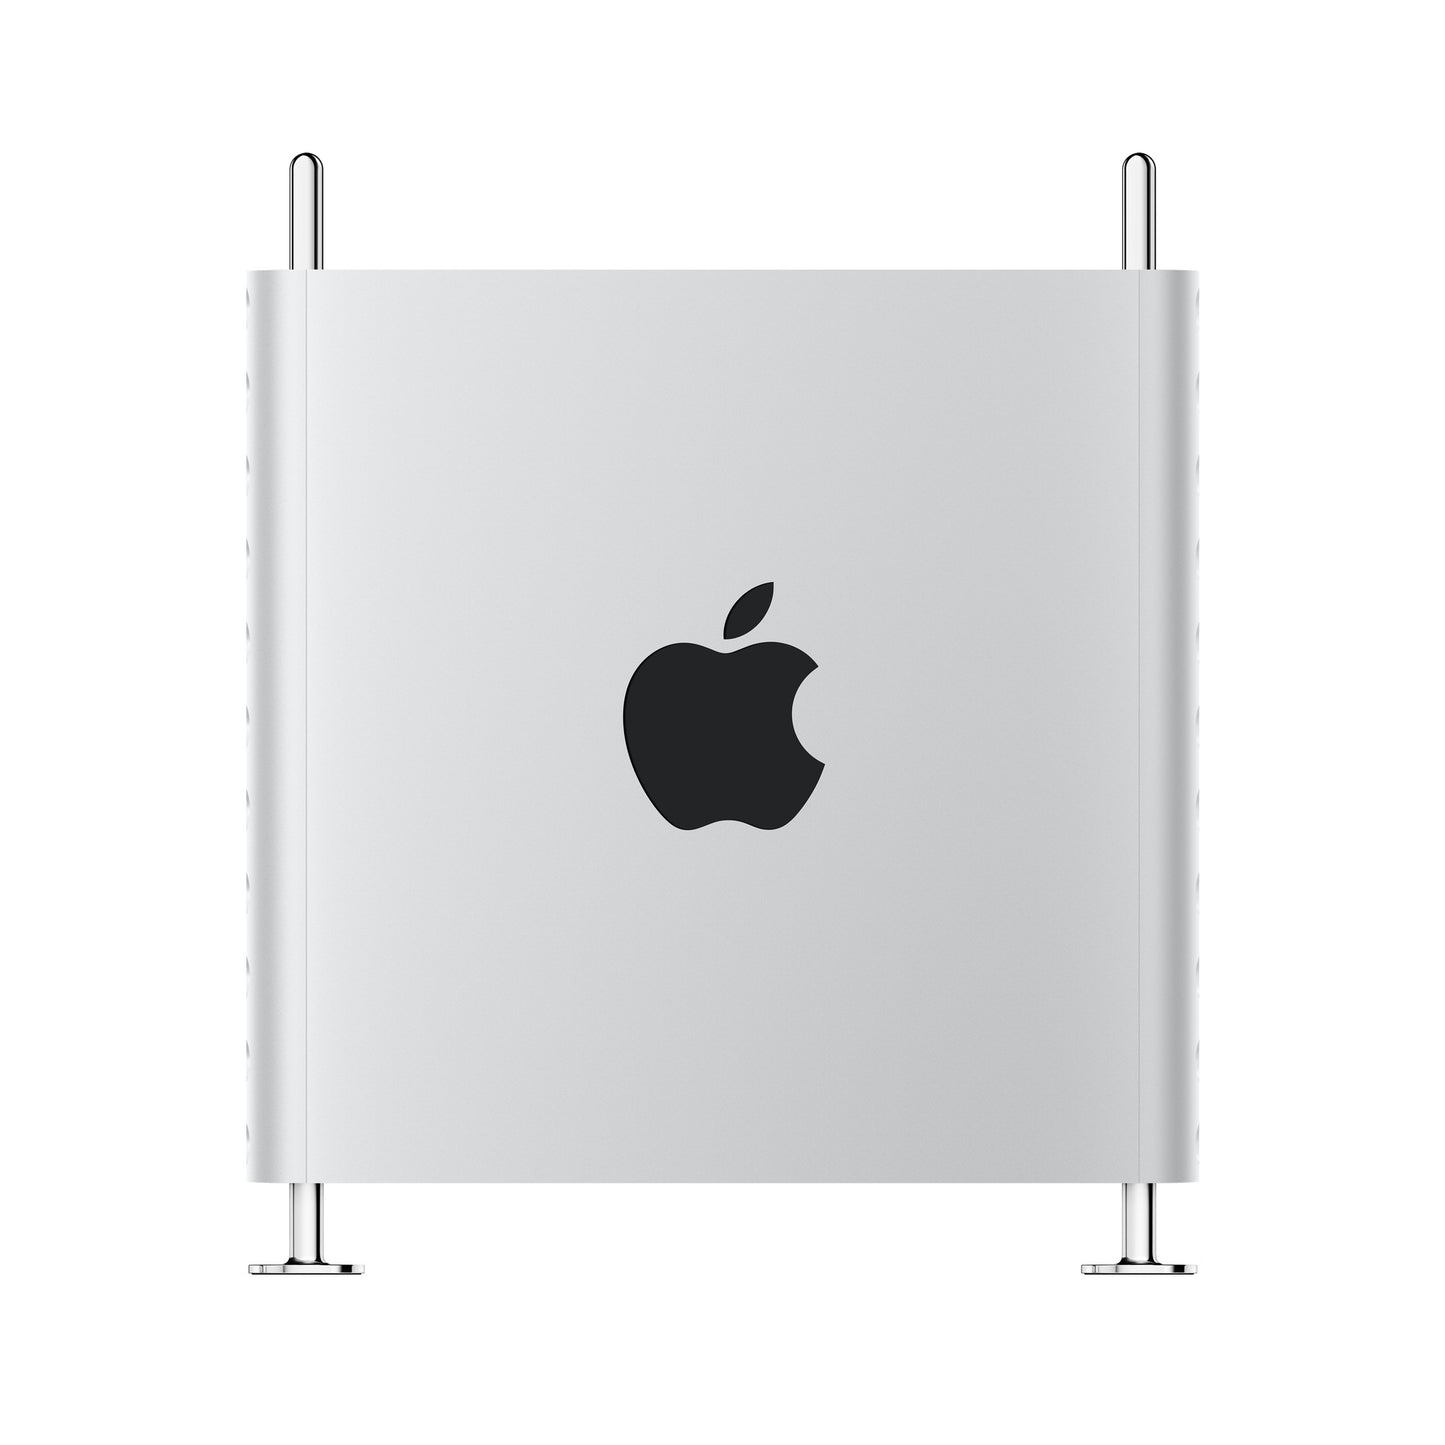 [DEMO] EOL Mac Pro 3,5-GHz 8-core Intel Xeon W, 32 GB, 256 GB, Radeon Pro 580 X